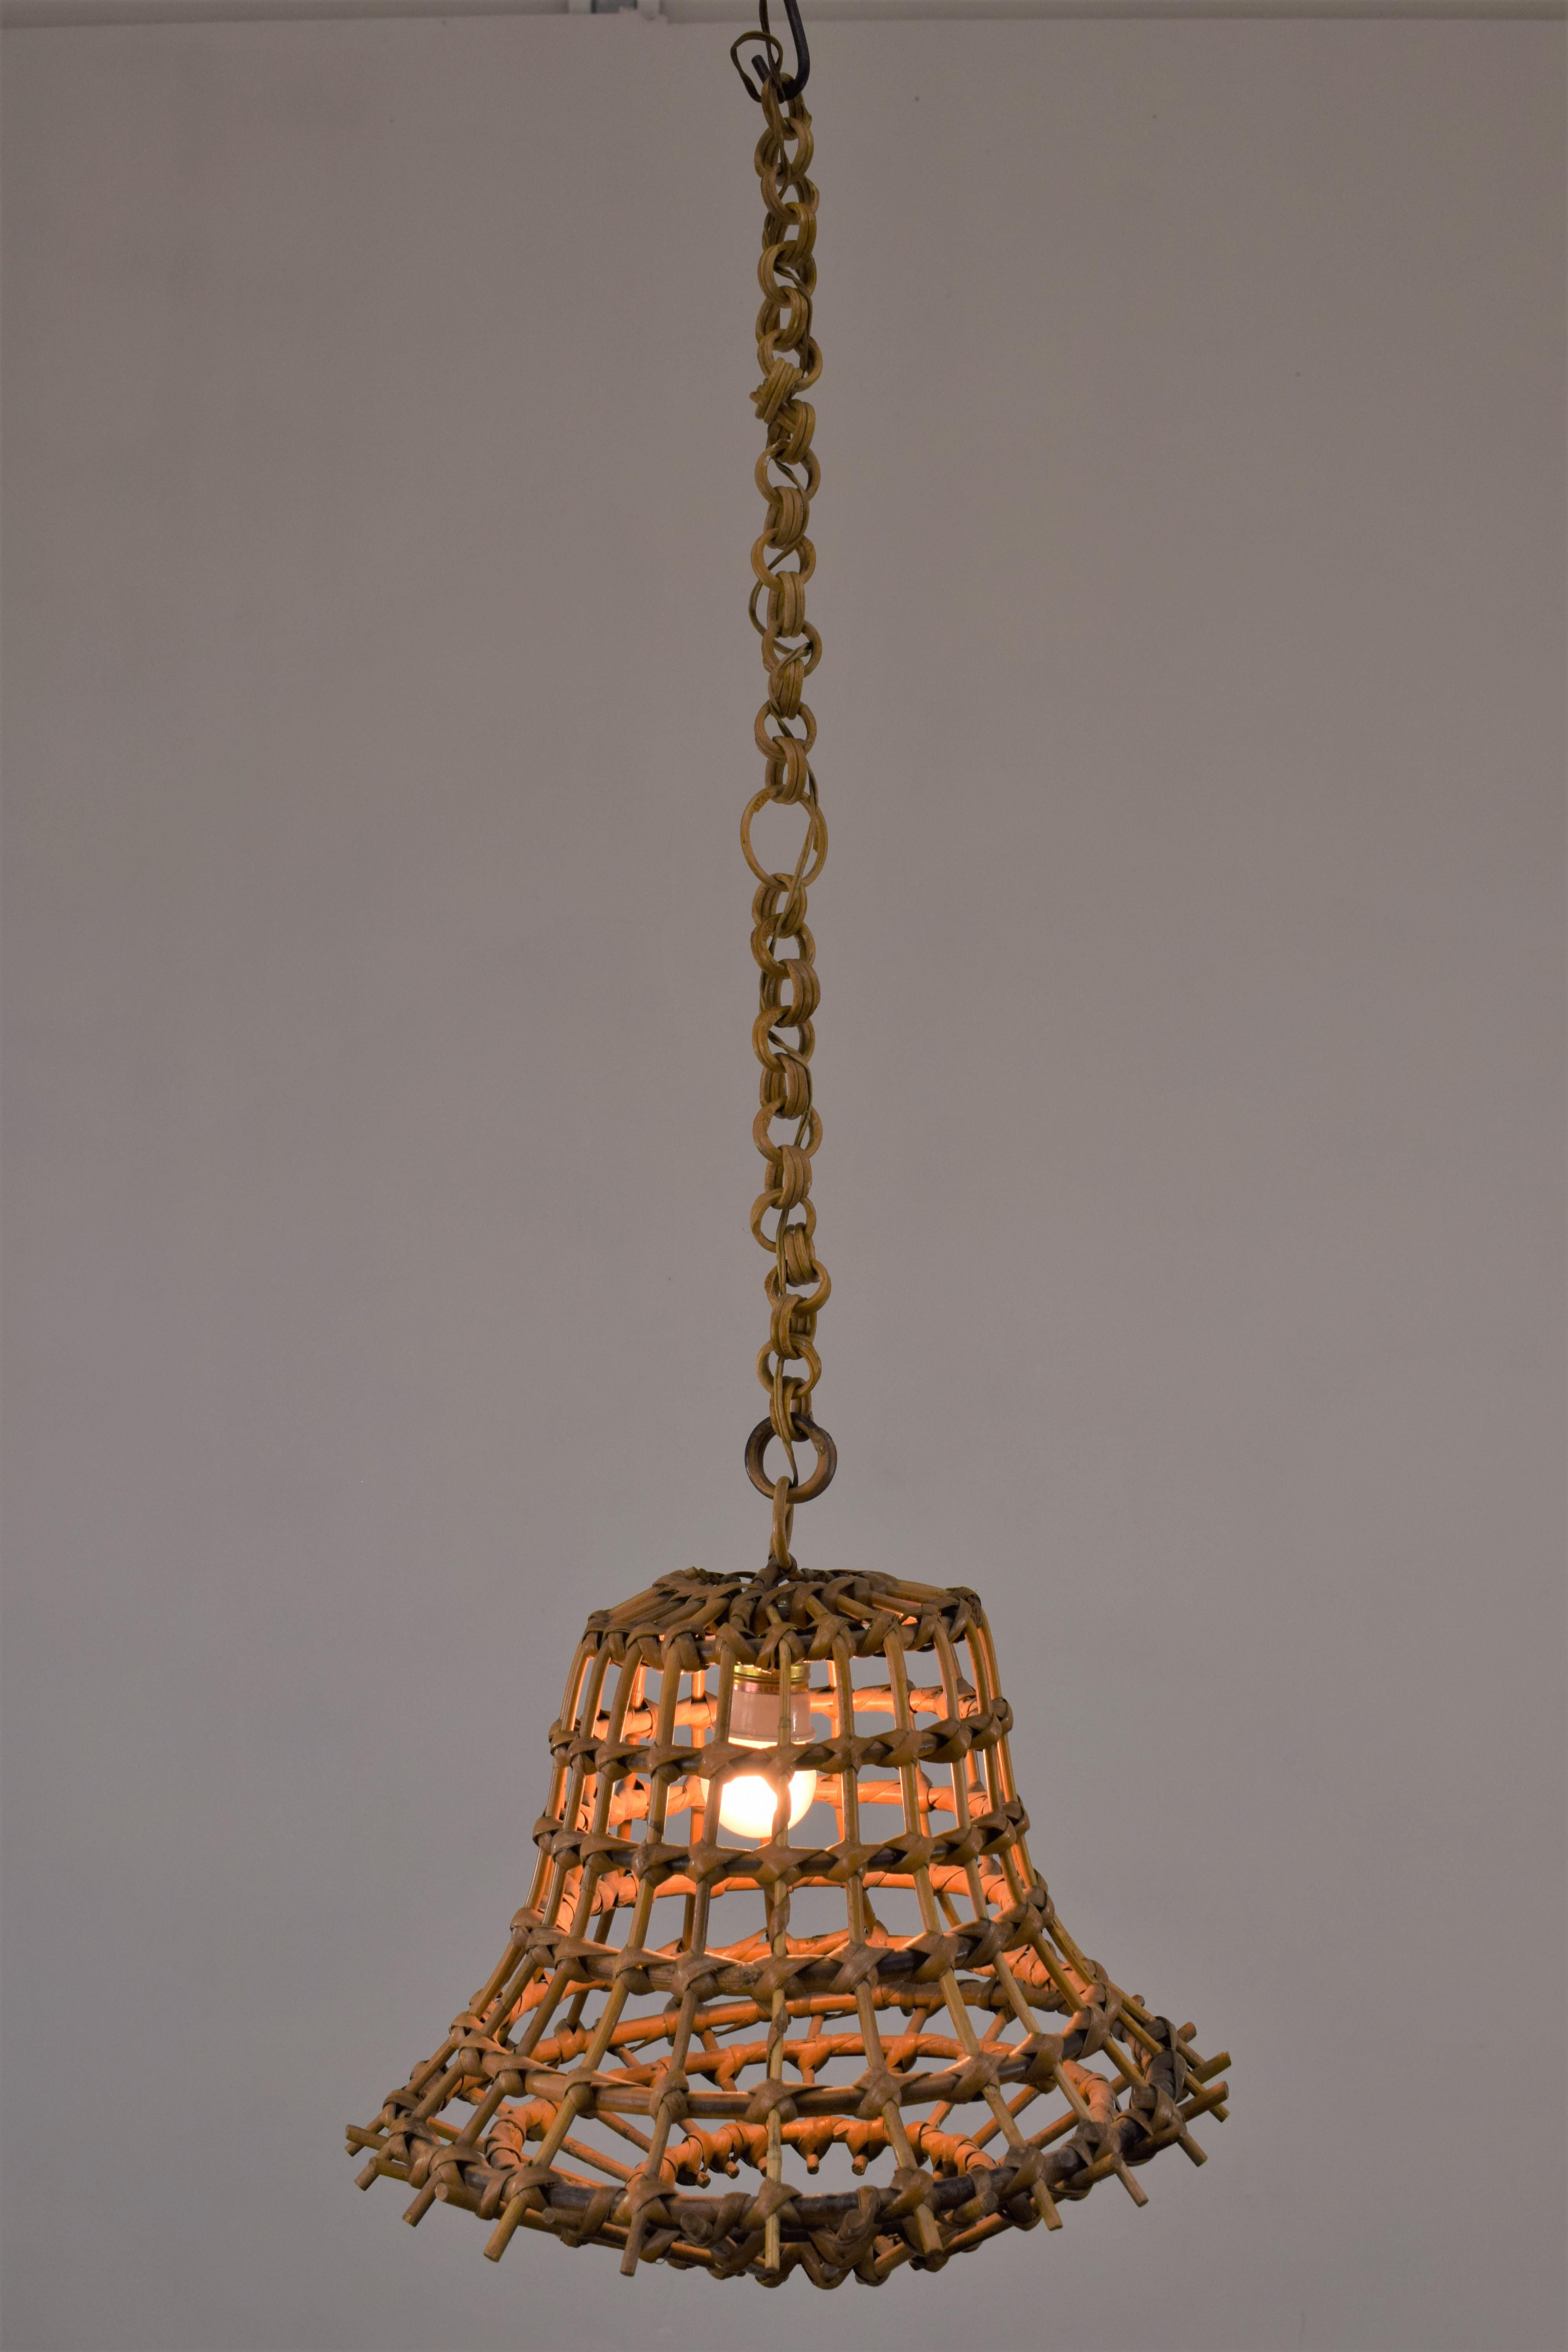 Italian bamboo chandelier, 1960s.
Dimensions: H= 87 cm; D= 36 cm.